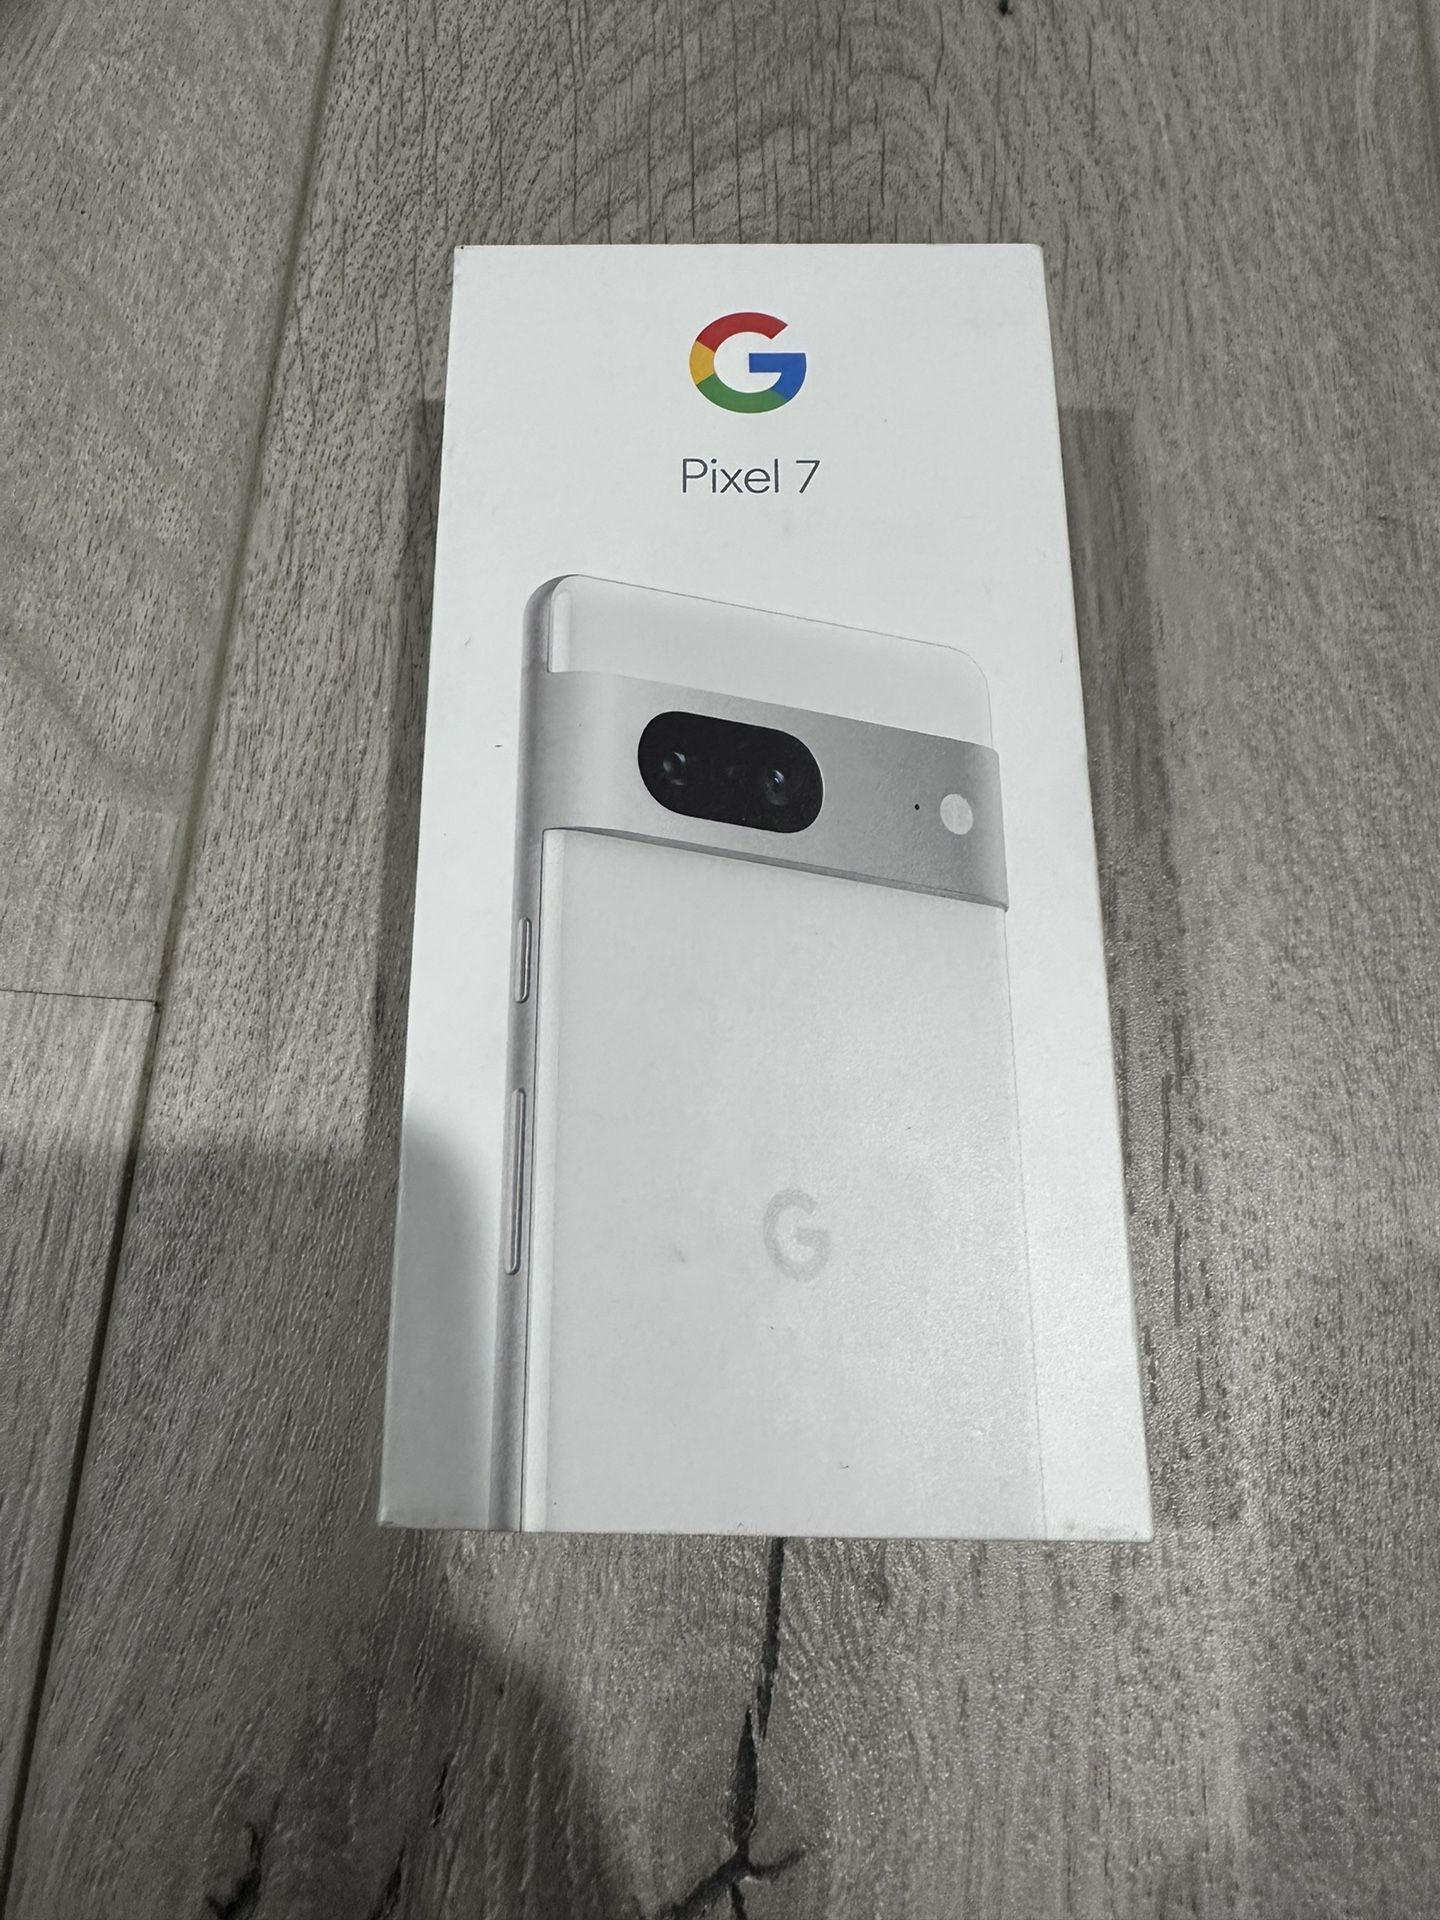 NEW Google Pixel 7 Phone (UNLOCKED, Latest Model)